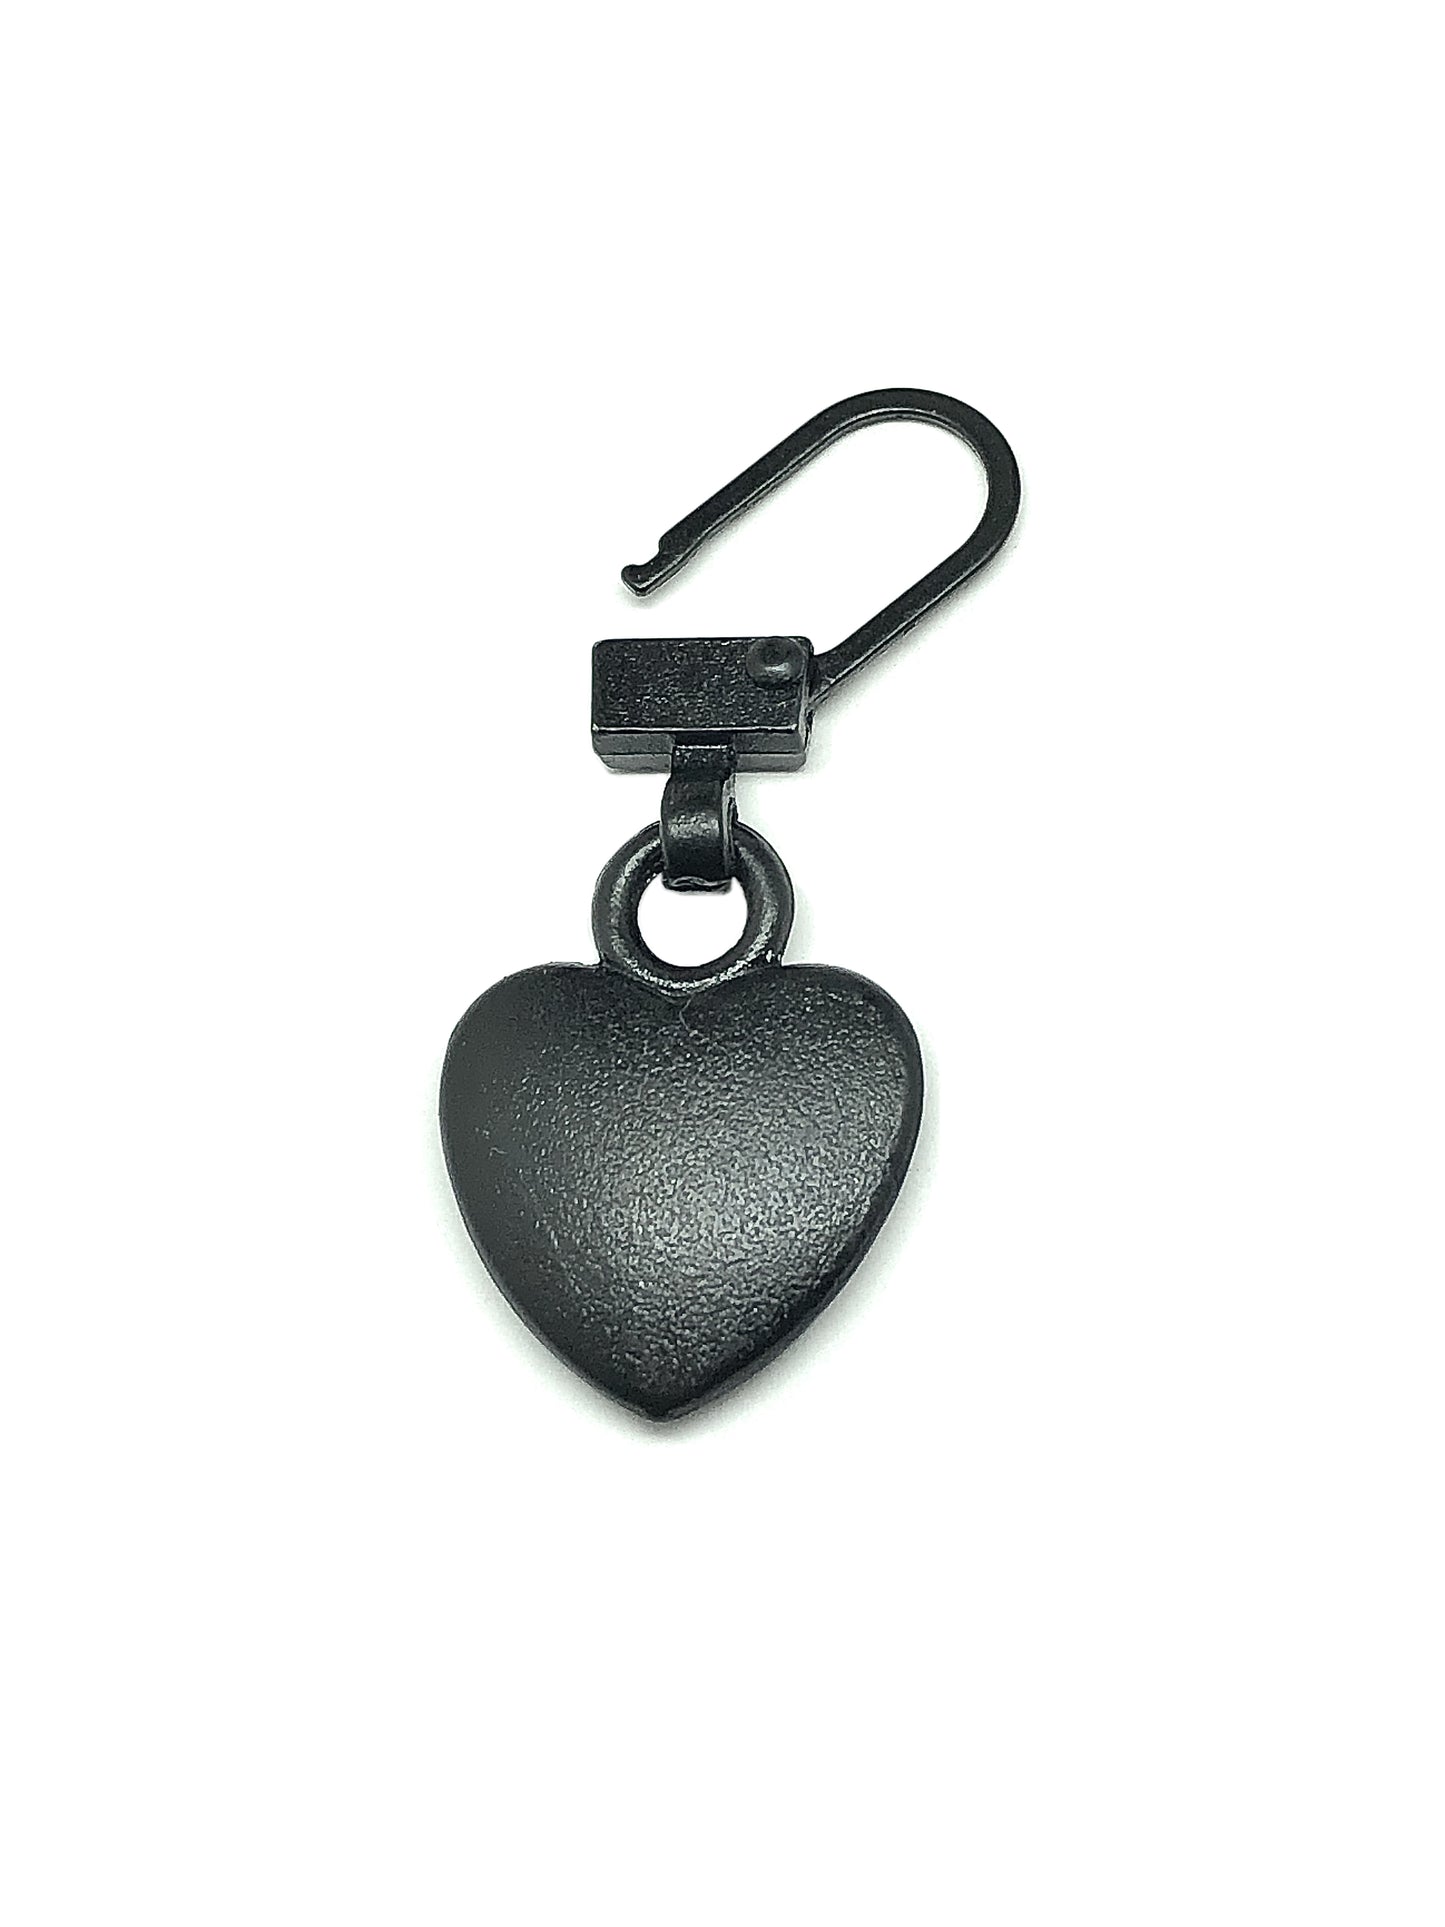 Blingschlingers - Any Zipper Repair Charm - Rustic Black Heart Zipper Pull Charm | Accessorize anything